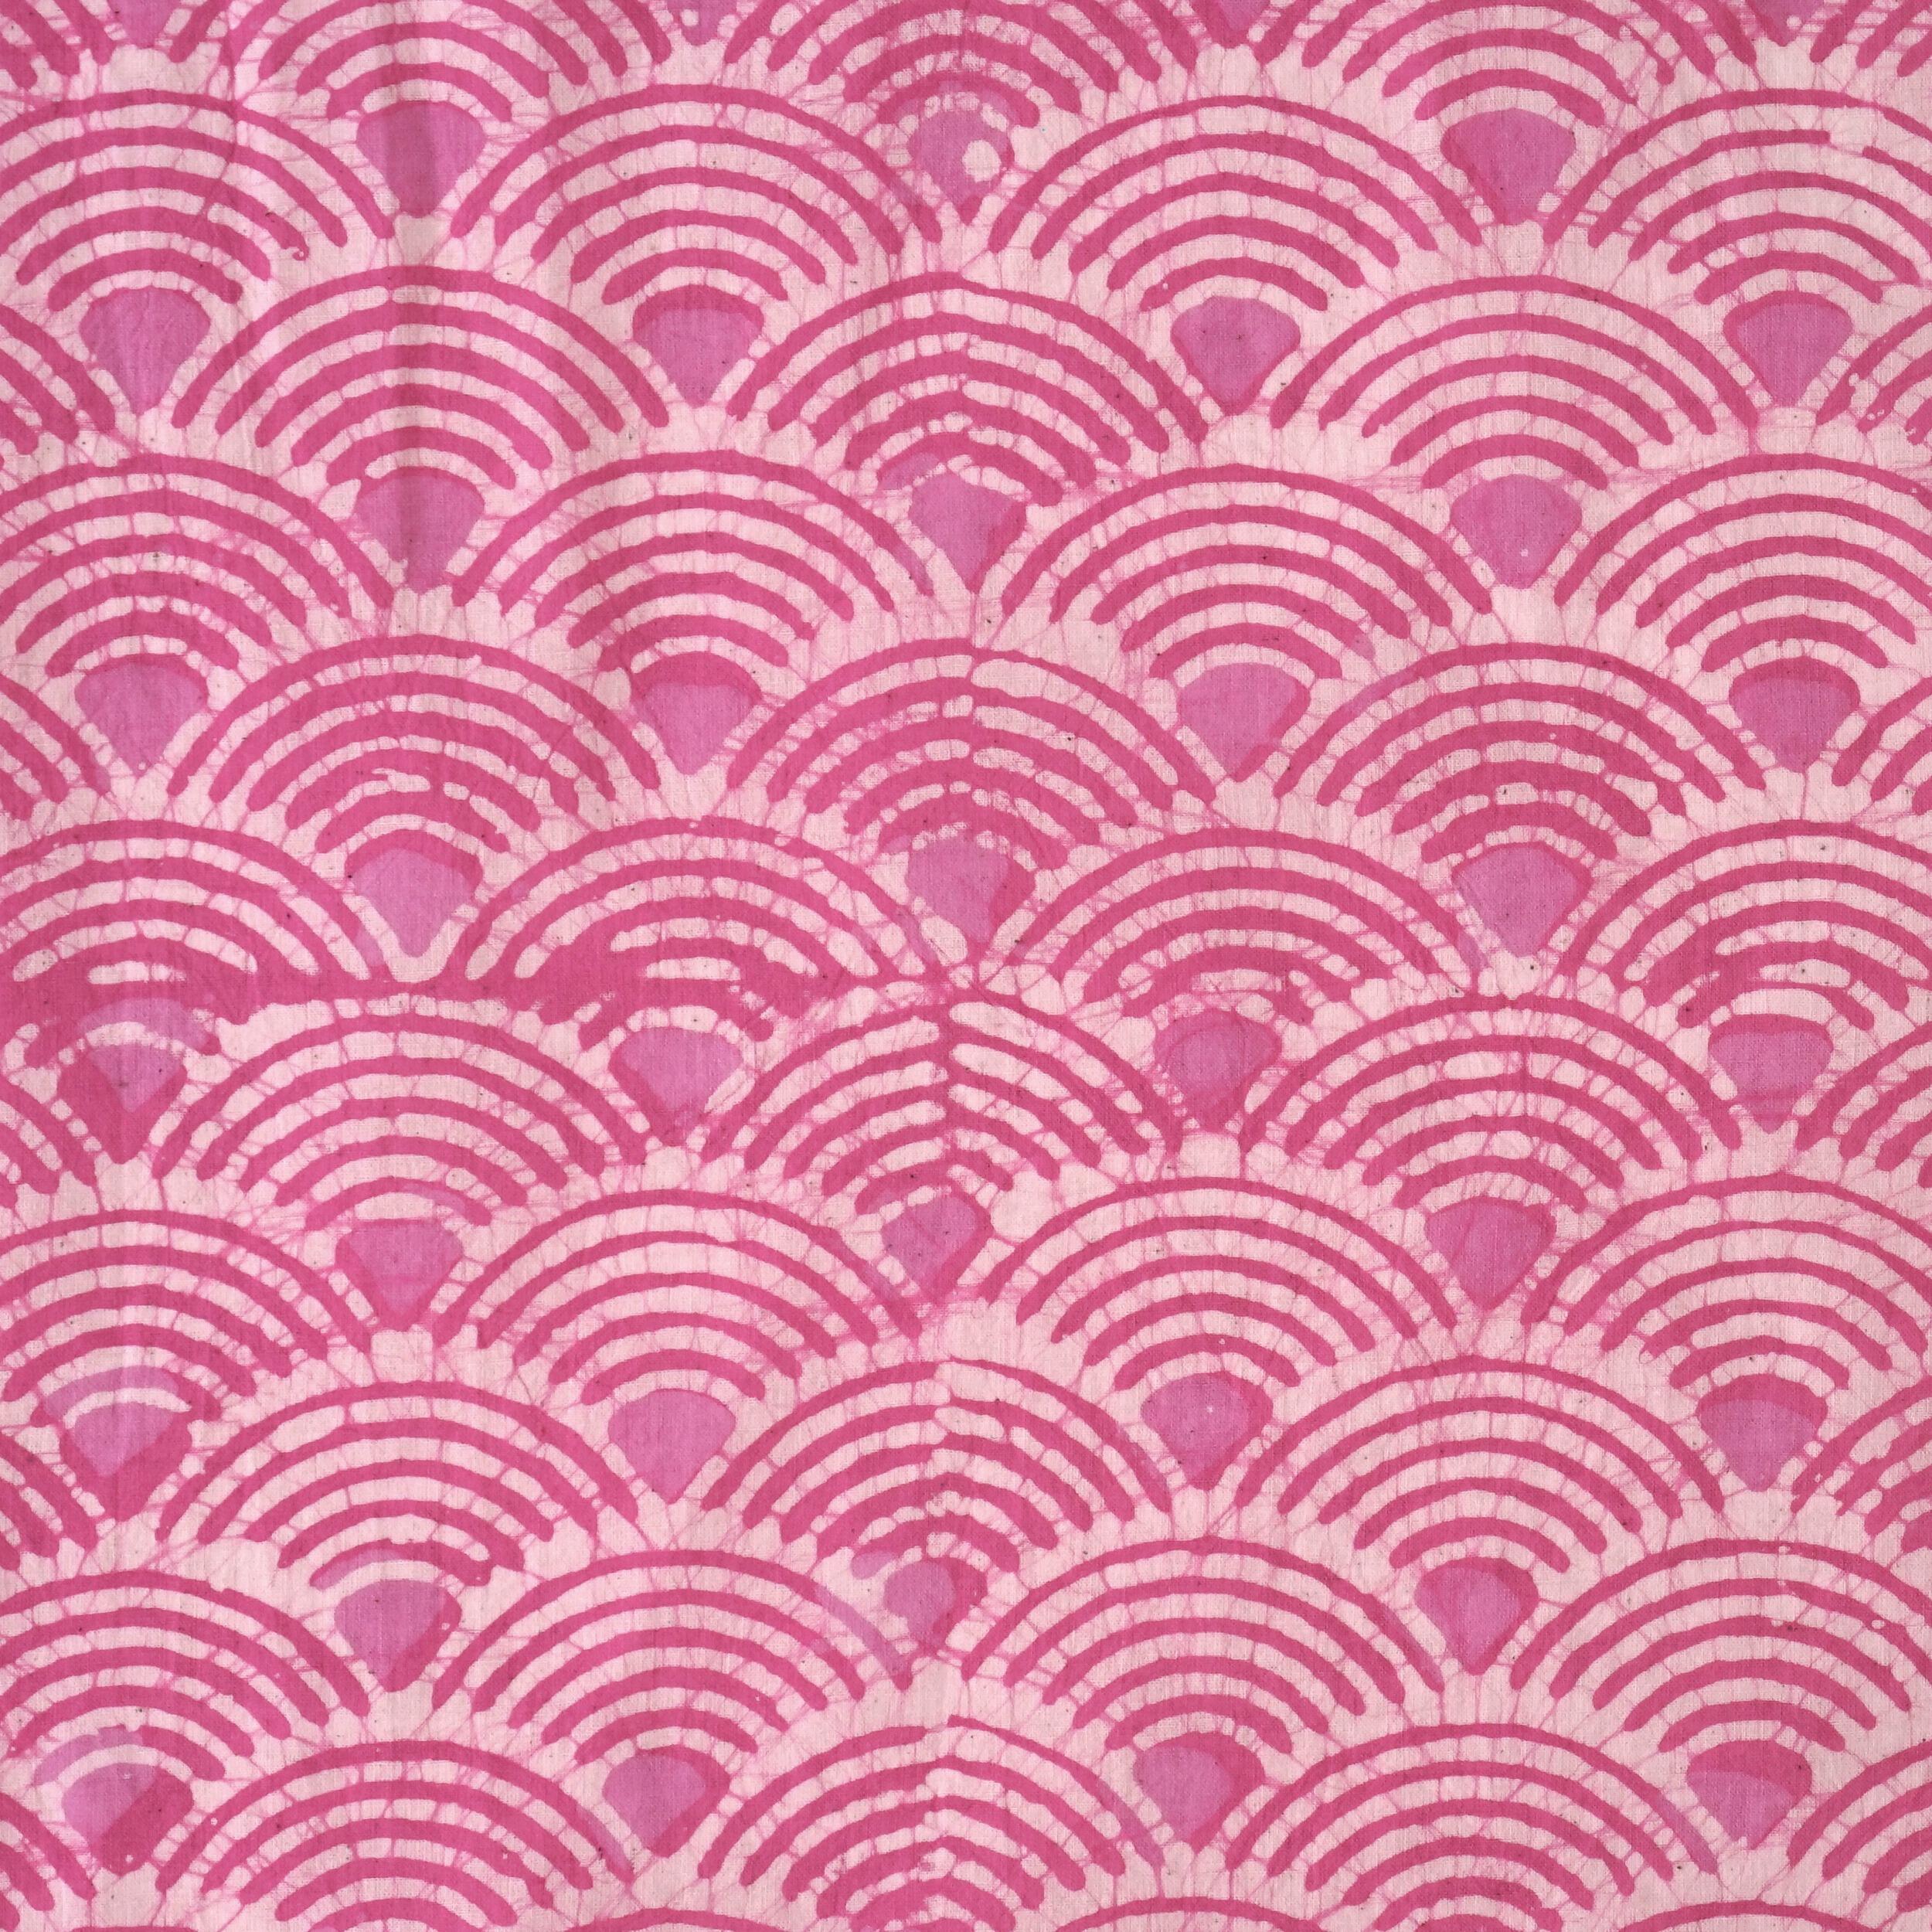 100% Block-Printed Batik Cotton Fabric From India - Batik - Pink Red Scales - Flat